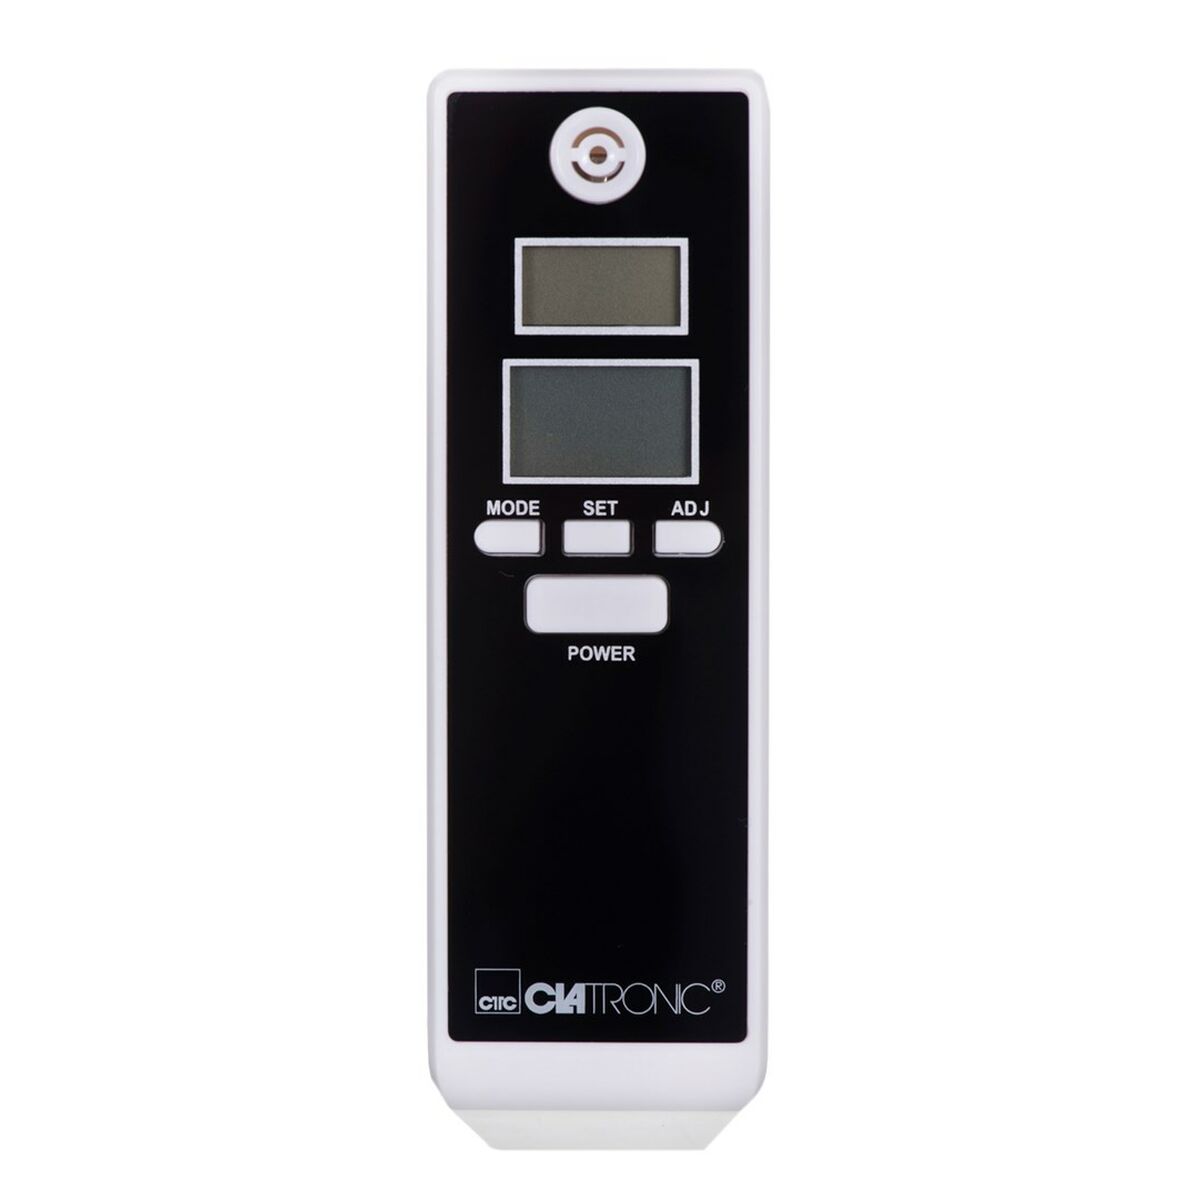 Etilometro digitale Clatronic AT 3605 Bianco Nero